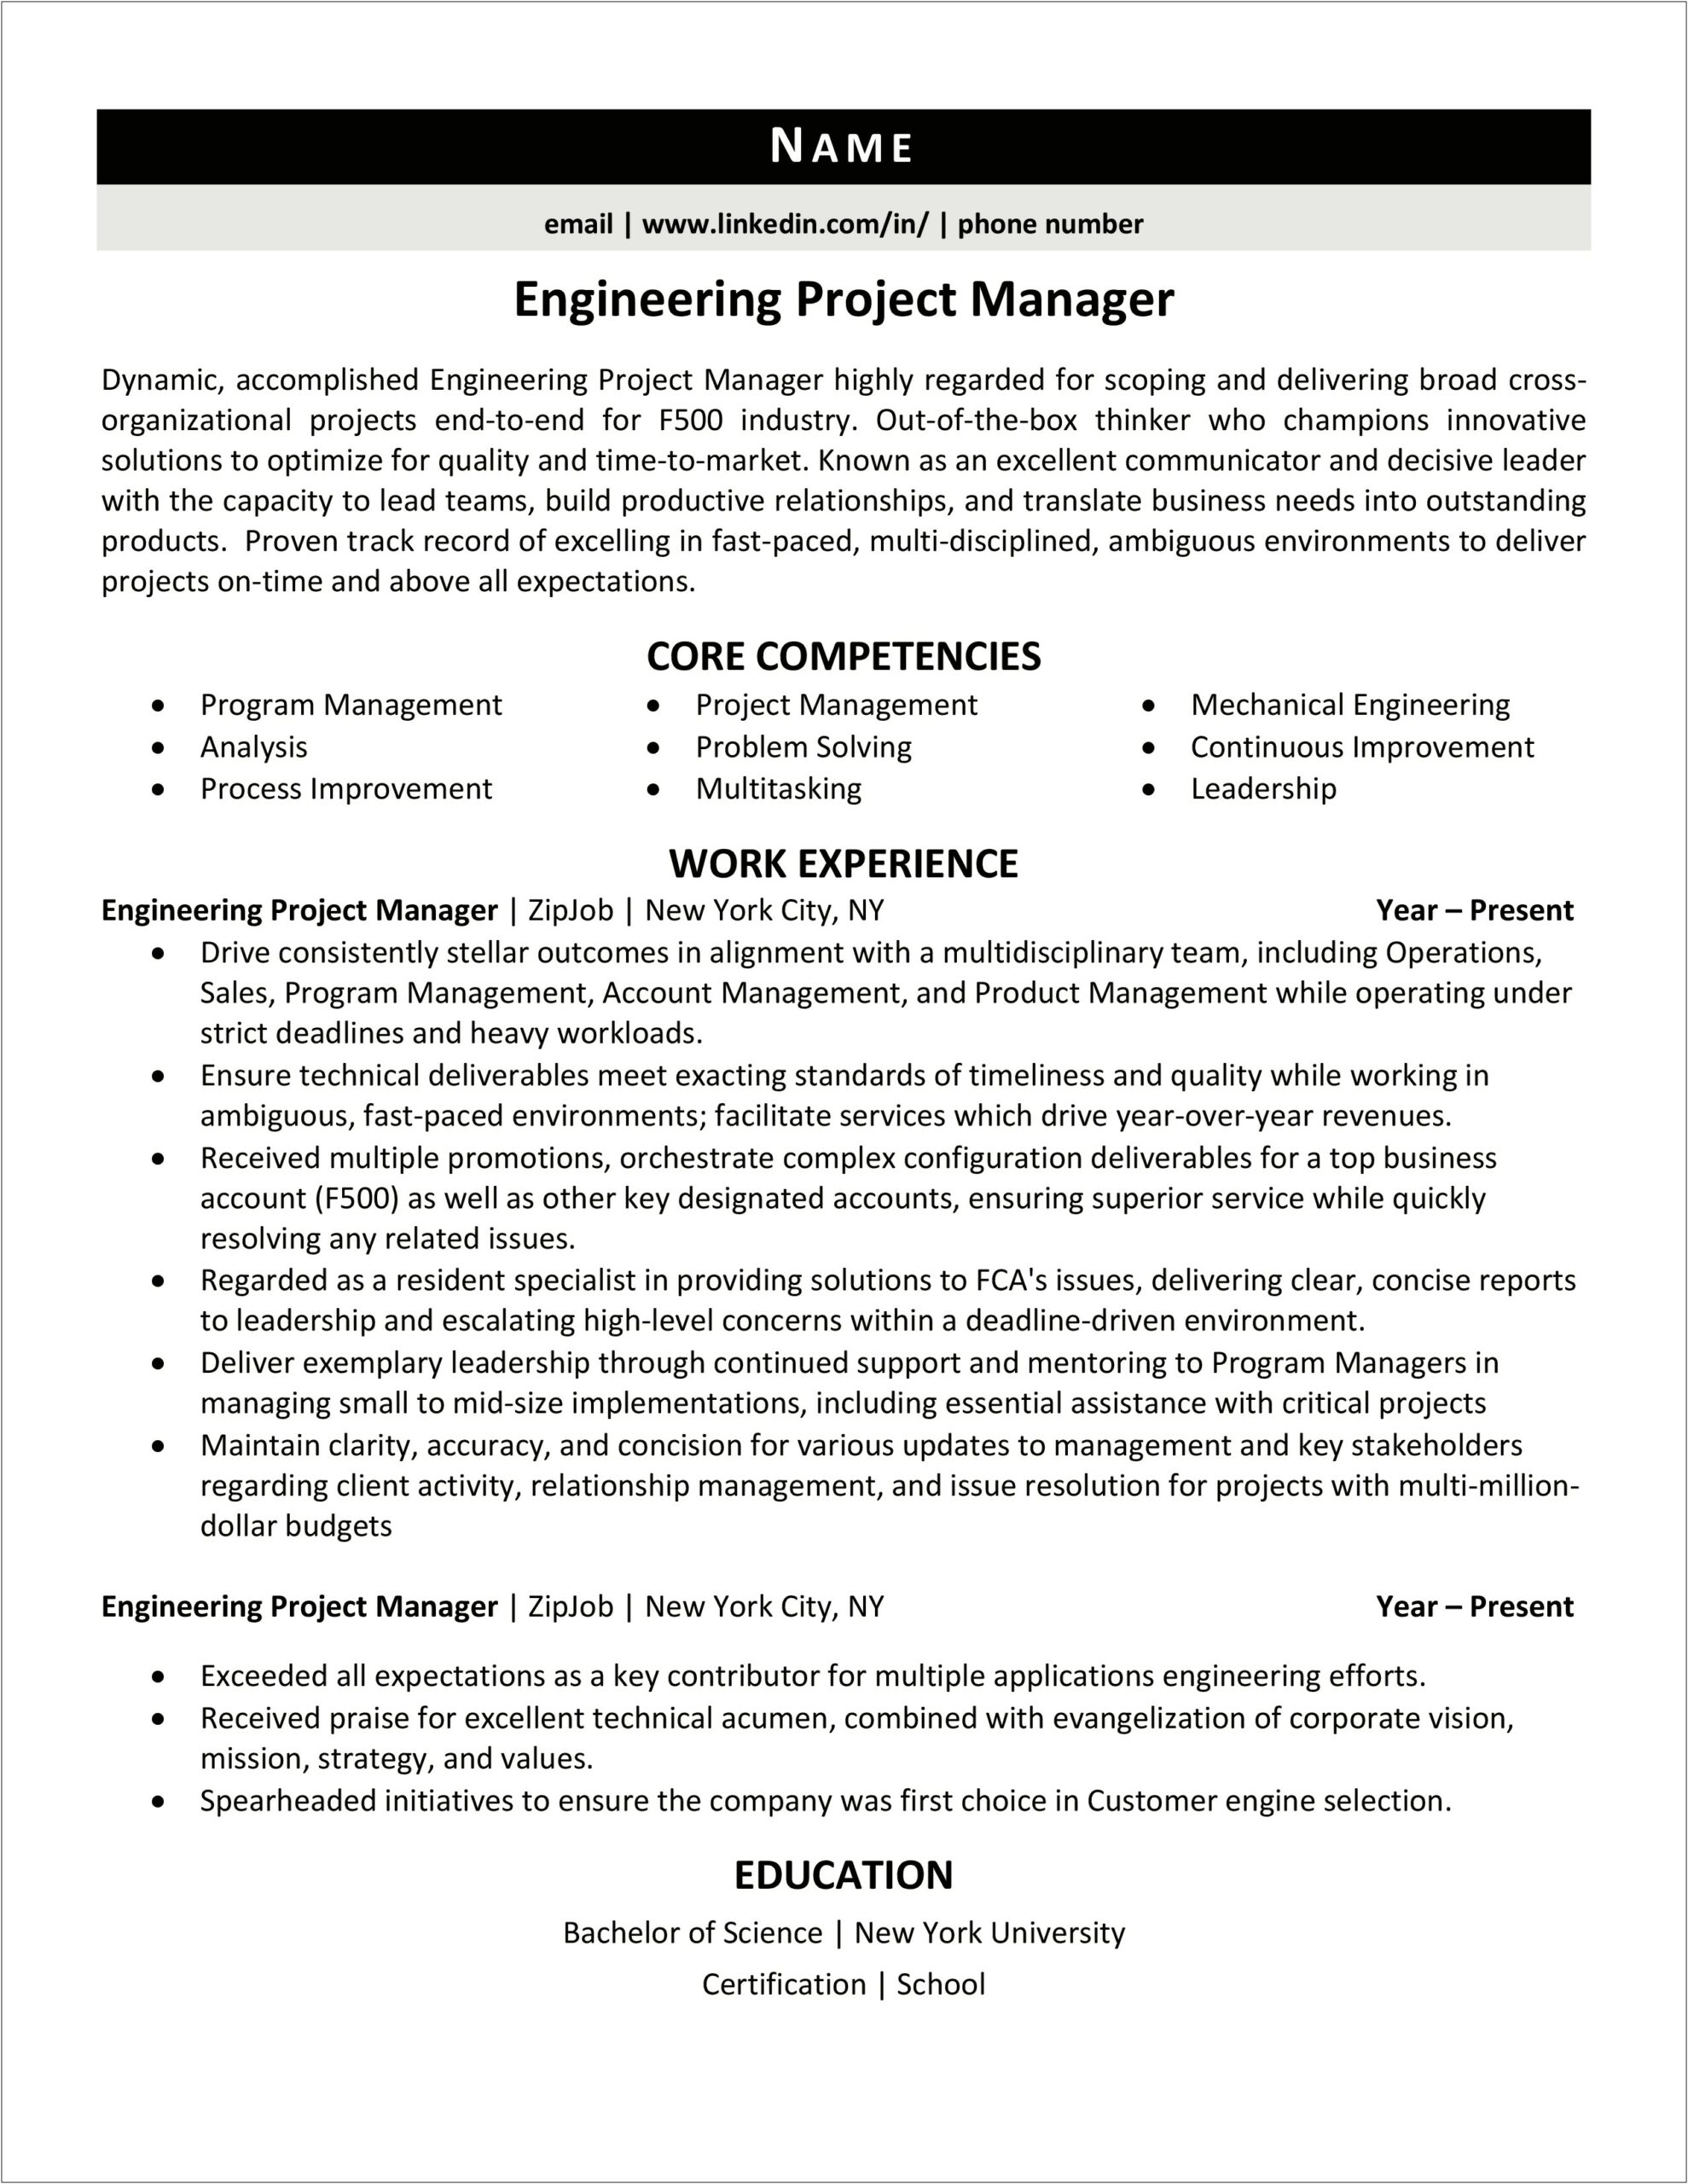 Engineering Program Manager Resume Sample